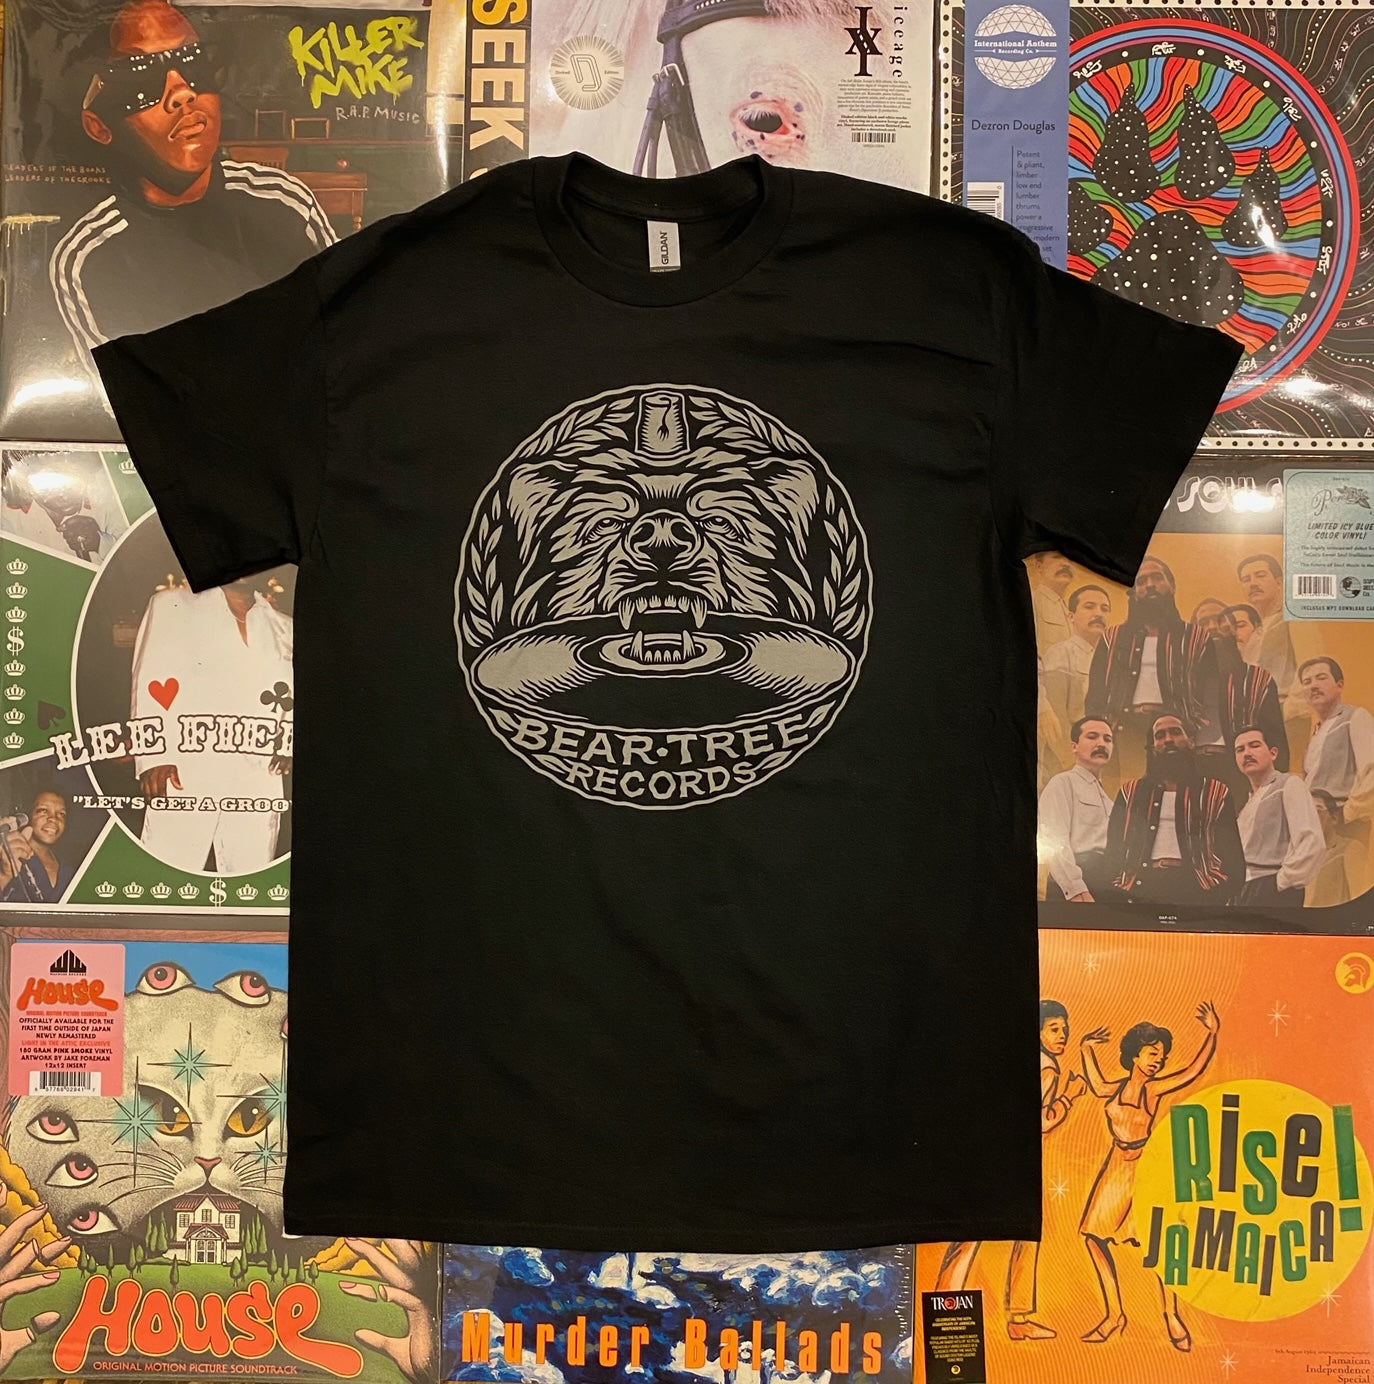 Bear Tree Records T-Shirt (Tom J Newell Logo)